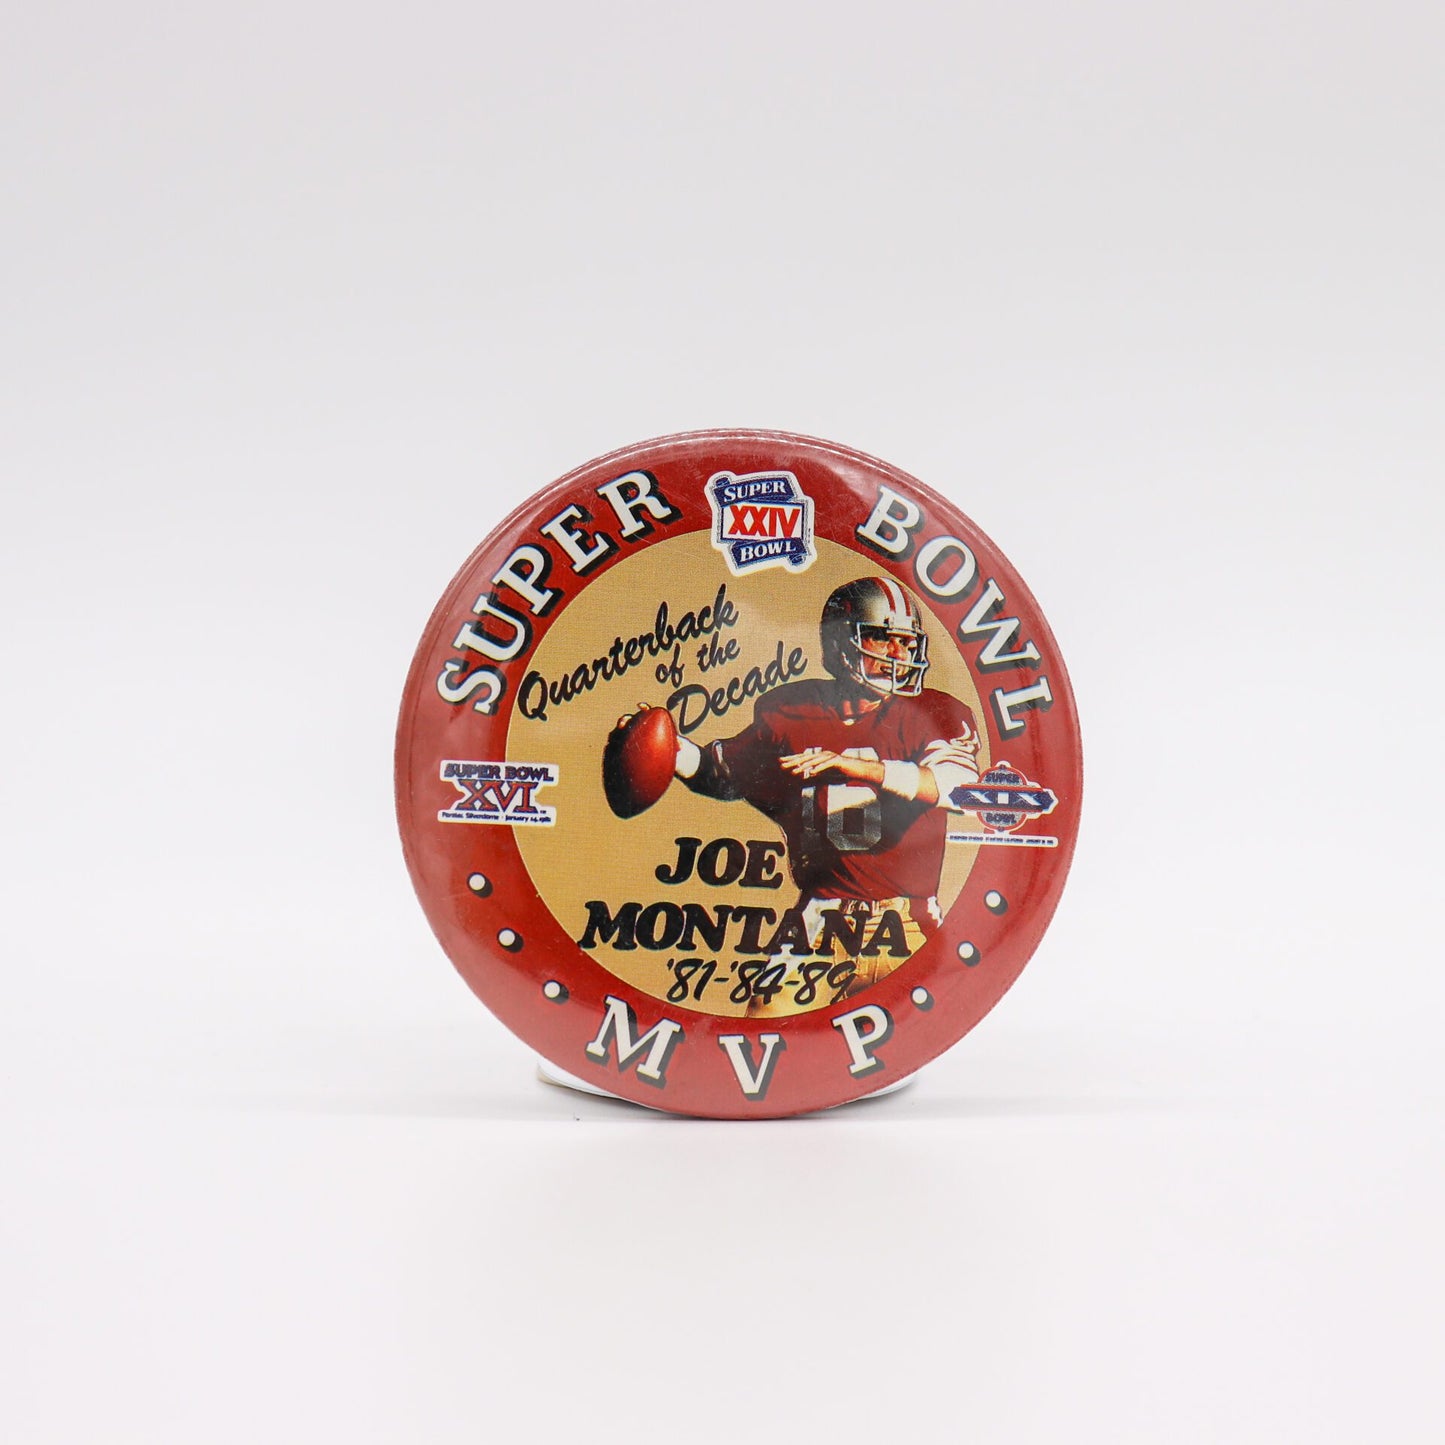 Joe Montana Three-Time Super Bowl Champion 3” Pinback Button, Very Good/Near Mint